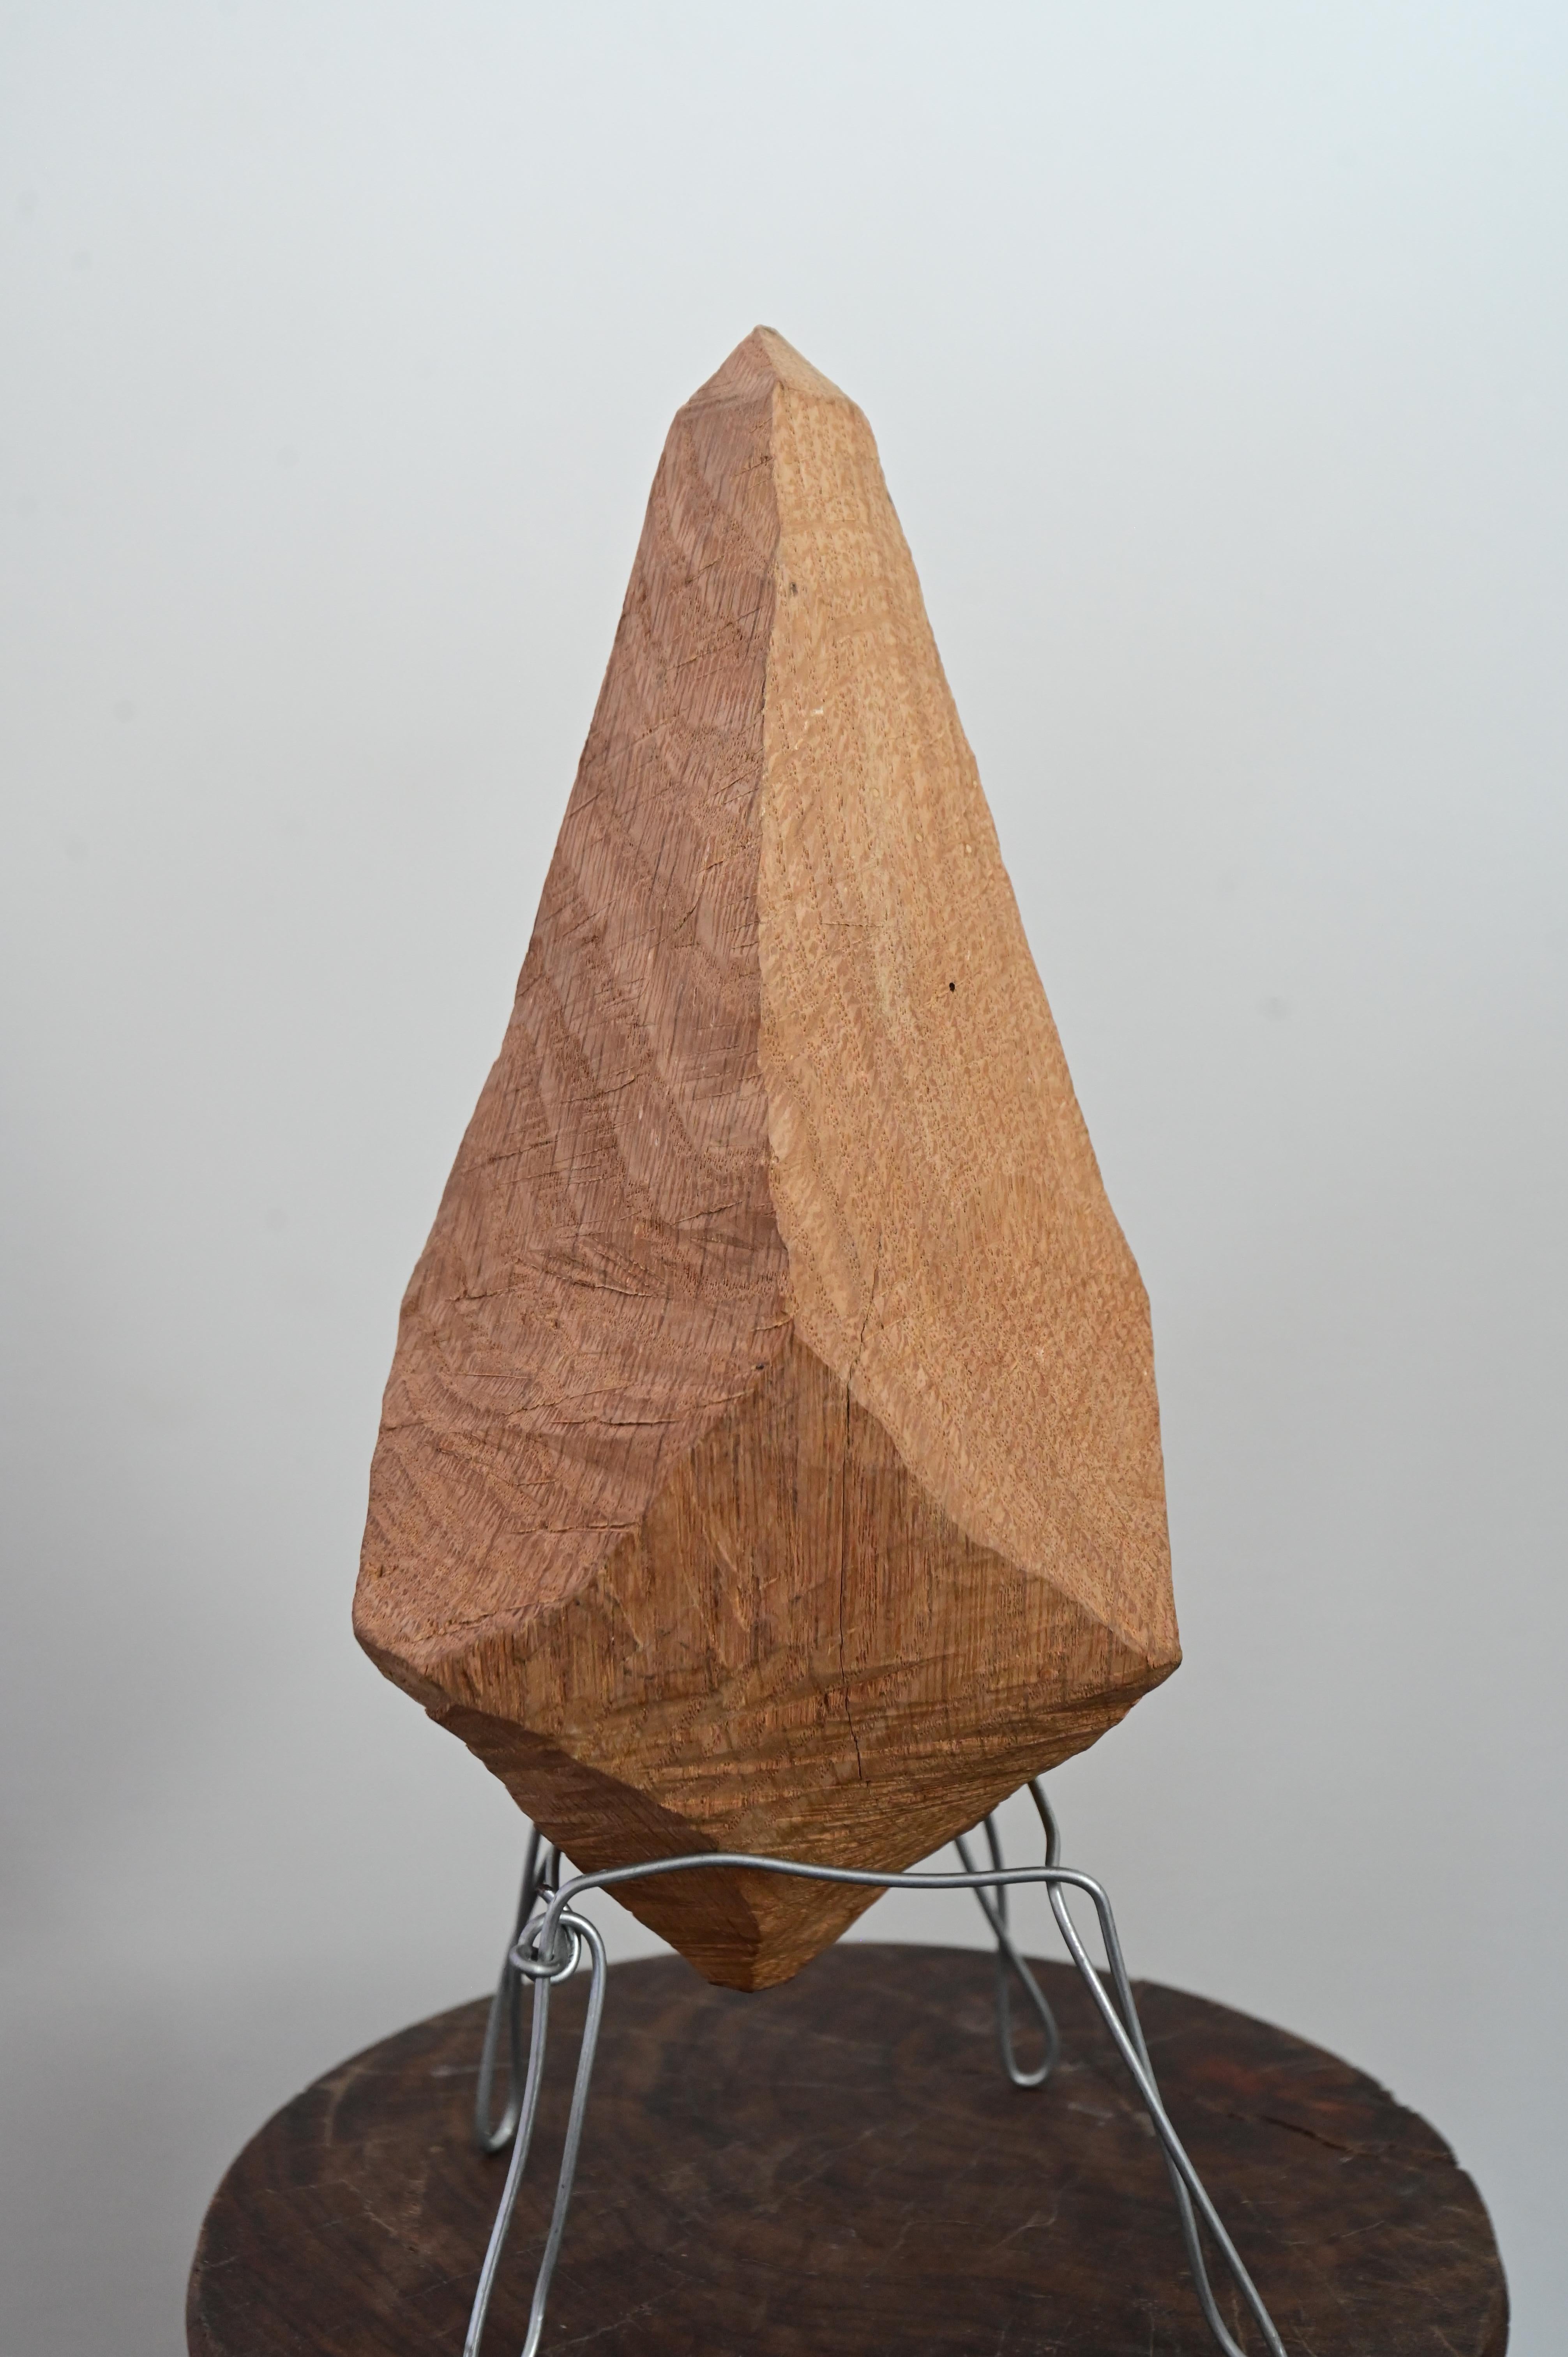 Primitive Wooden Artifact Sculpture For Sale